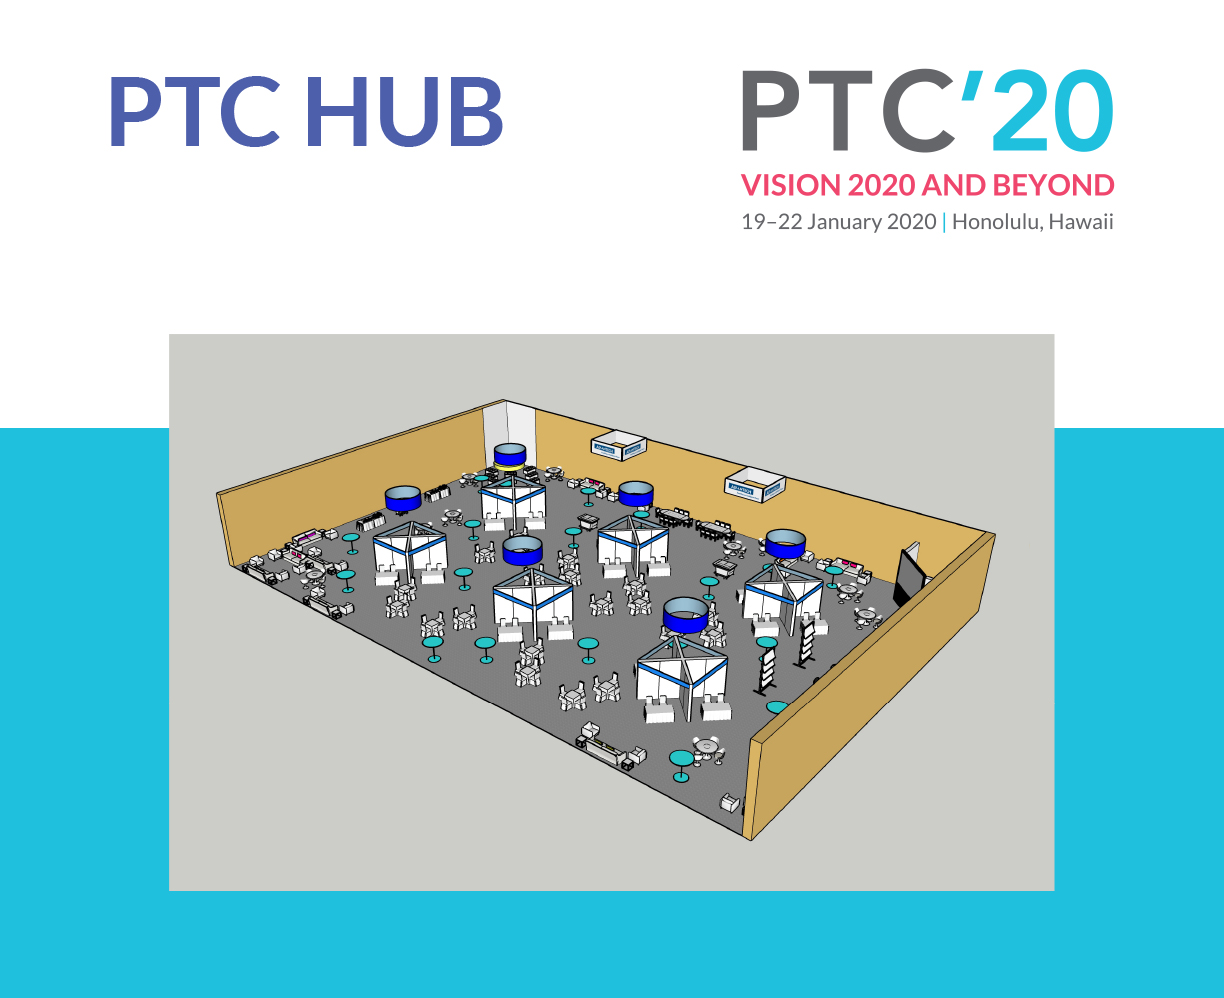 ptc-hub-layout-05282019-2